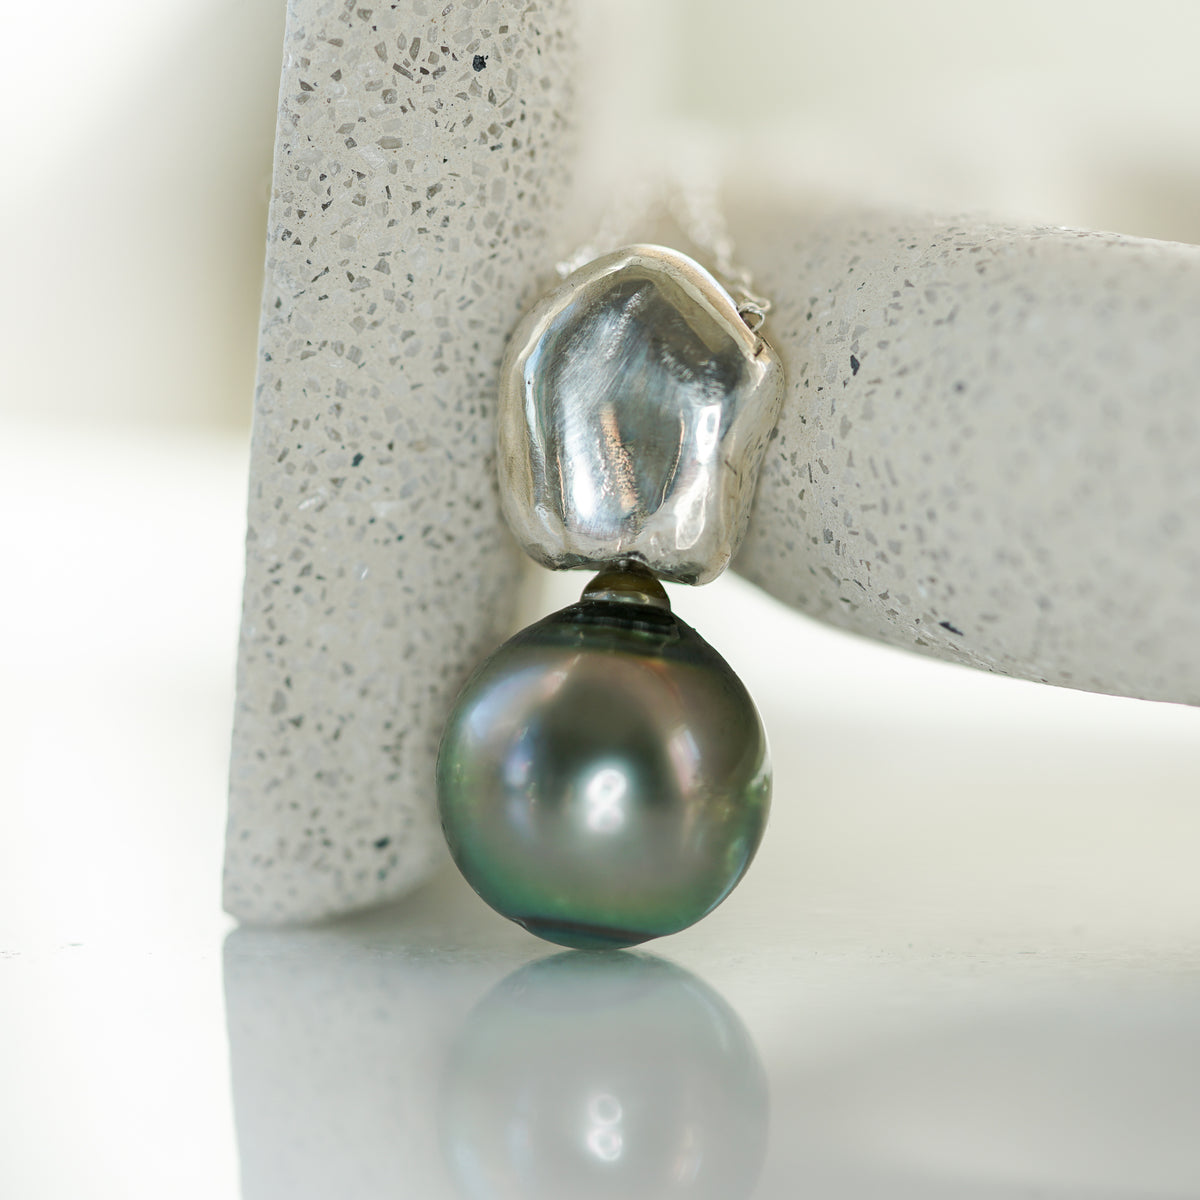 Peeble Tahitian Pearl necklace in silver